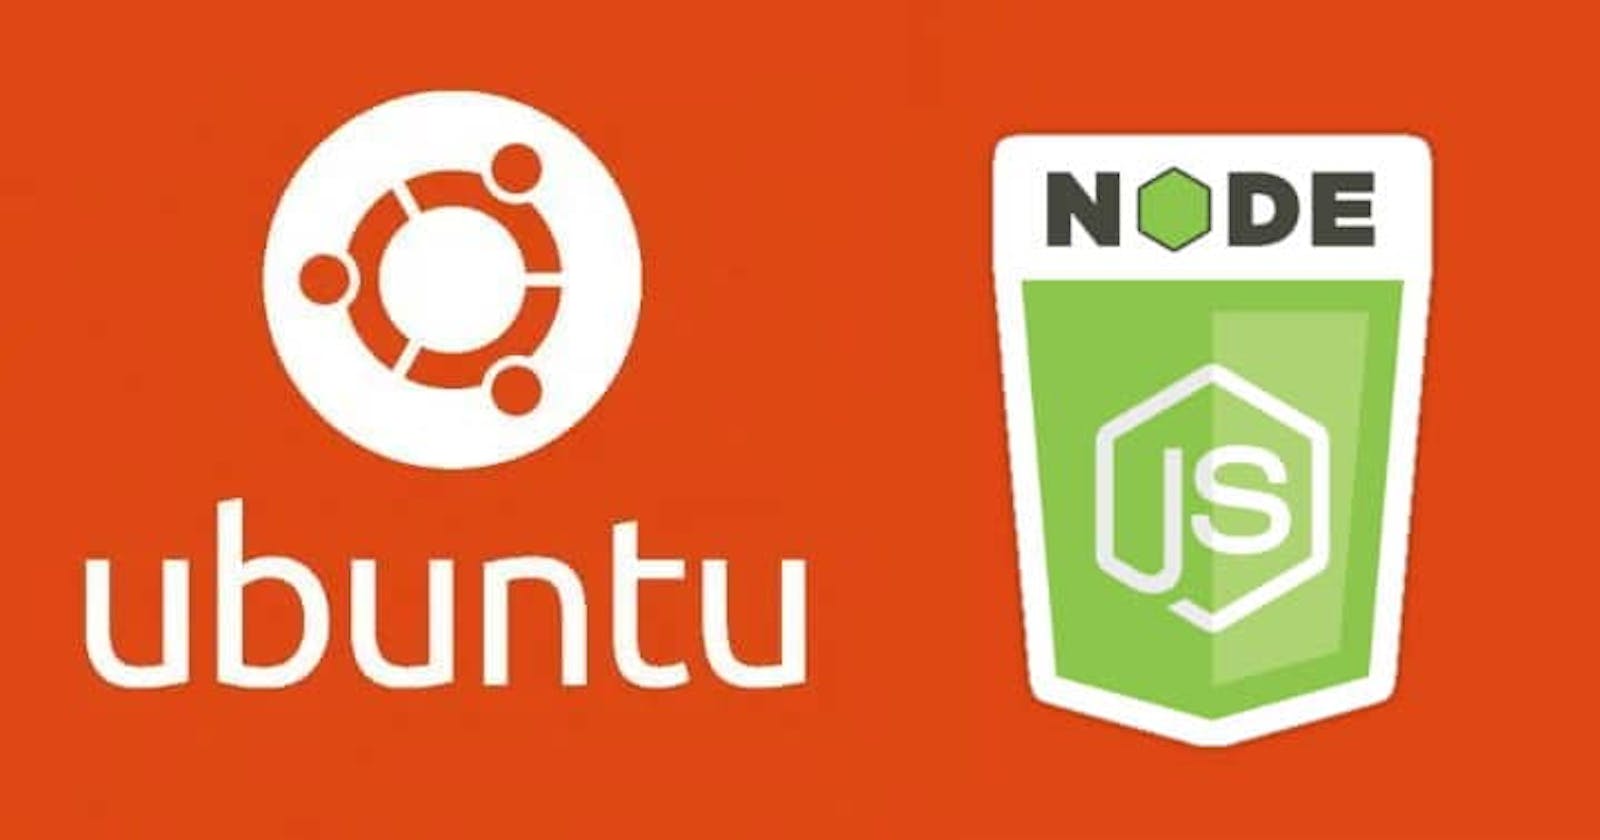 Node.js and npm Installation on my Ubuntu 20.04.2 LTS